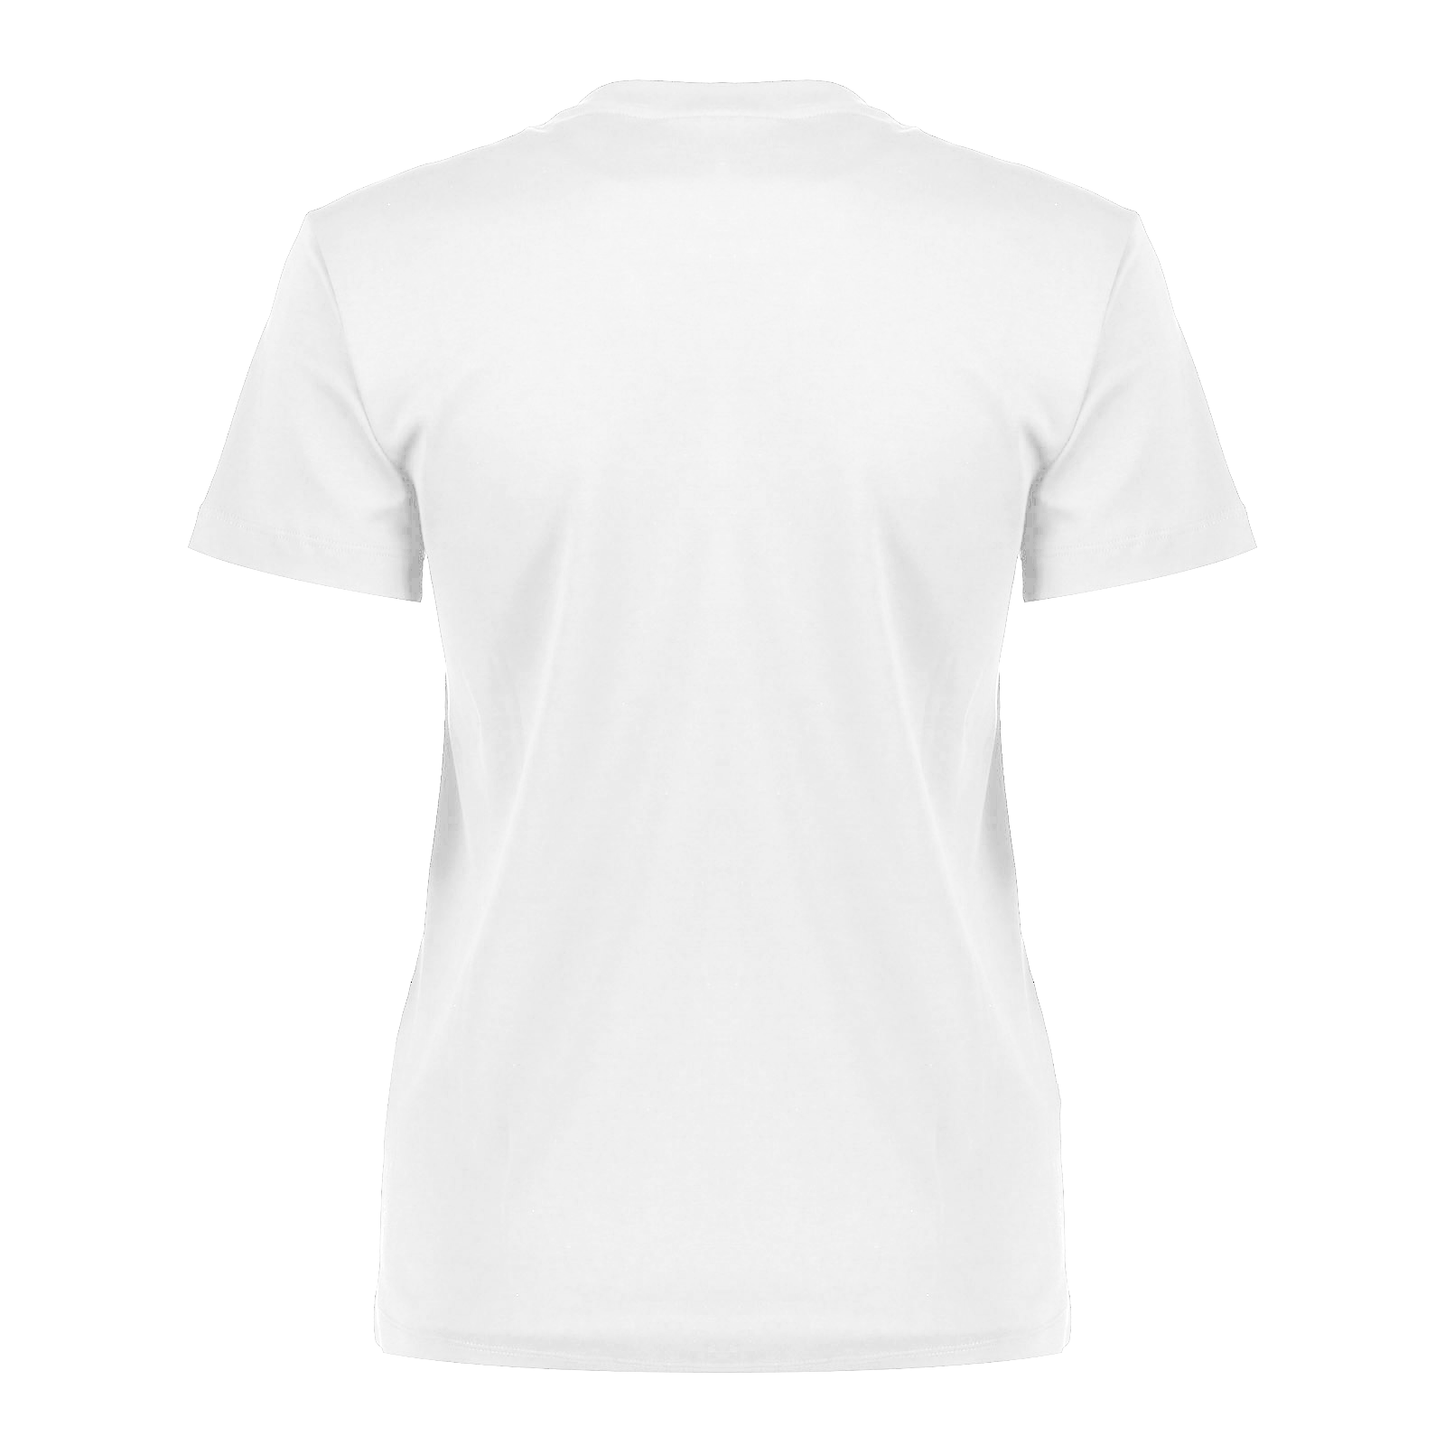 O OO White T-shirt Women - Do Goods® 